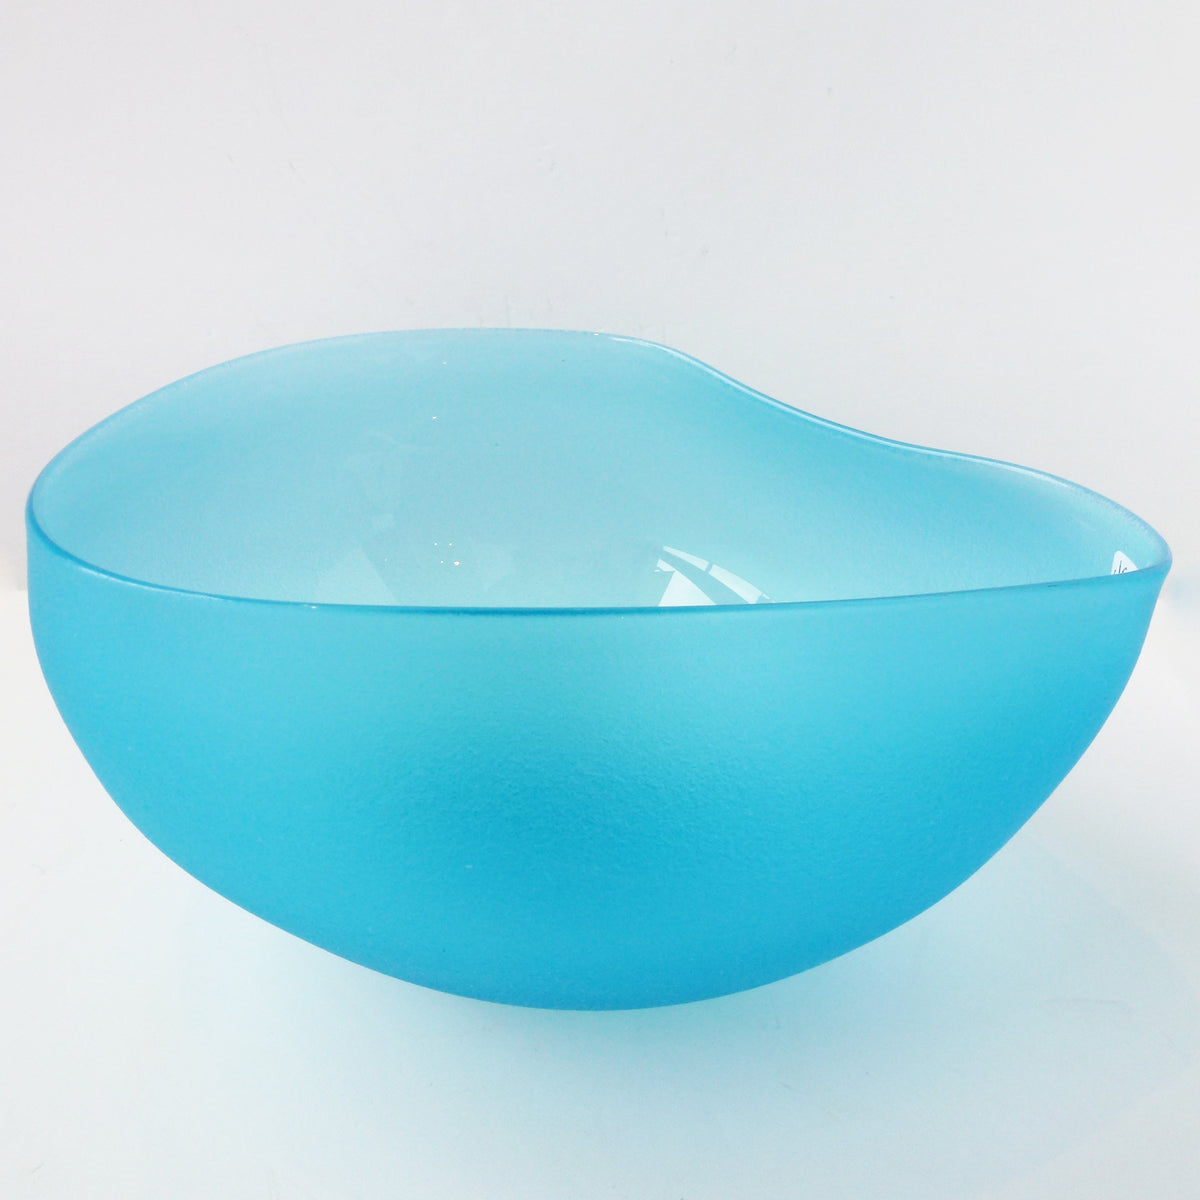 Goodman Studio - Copper Blue Topography Bowl